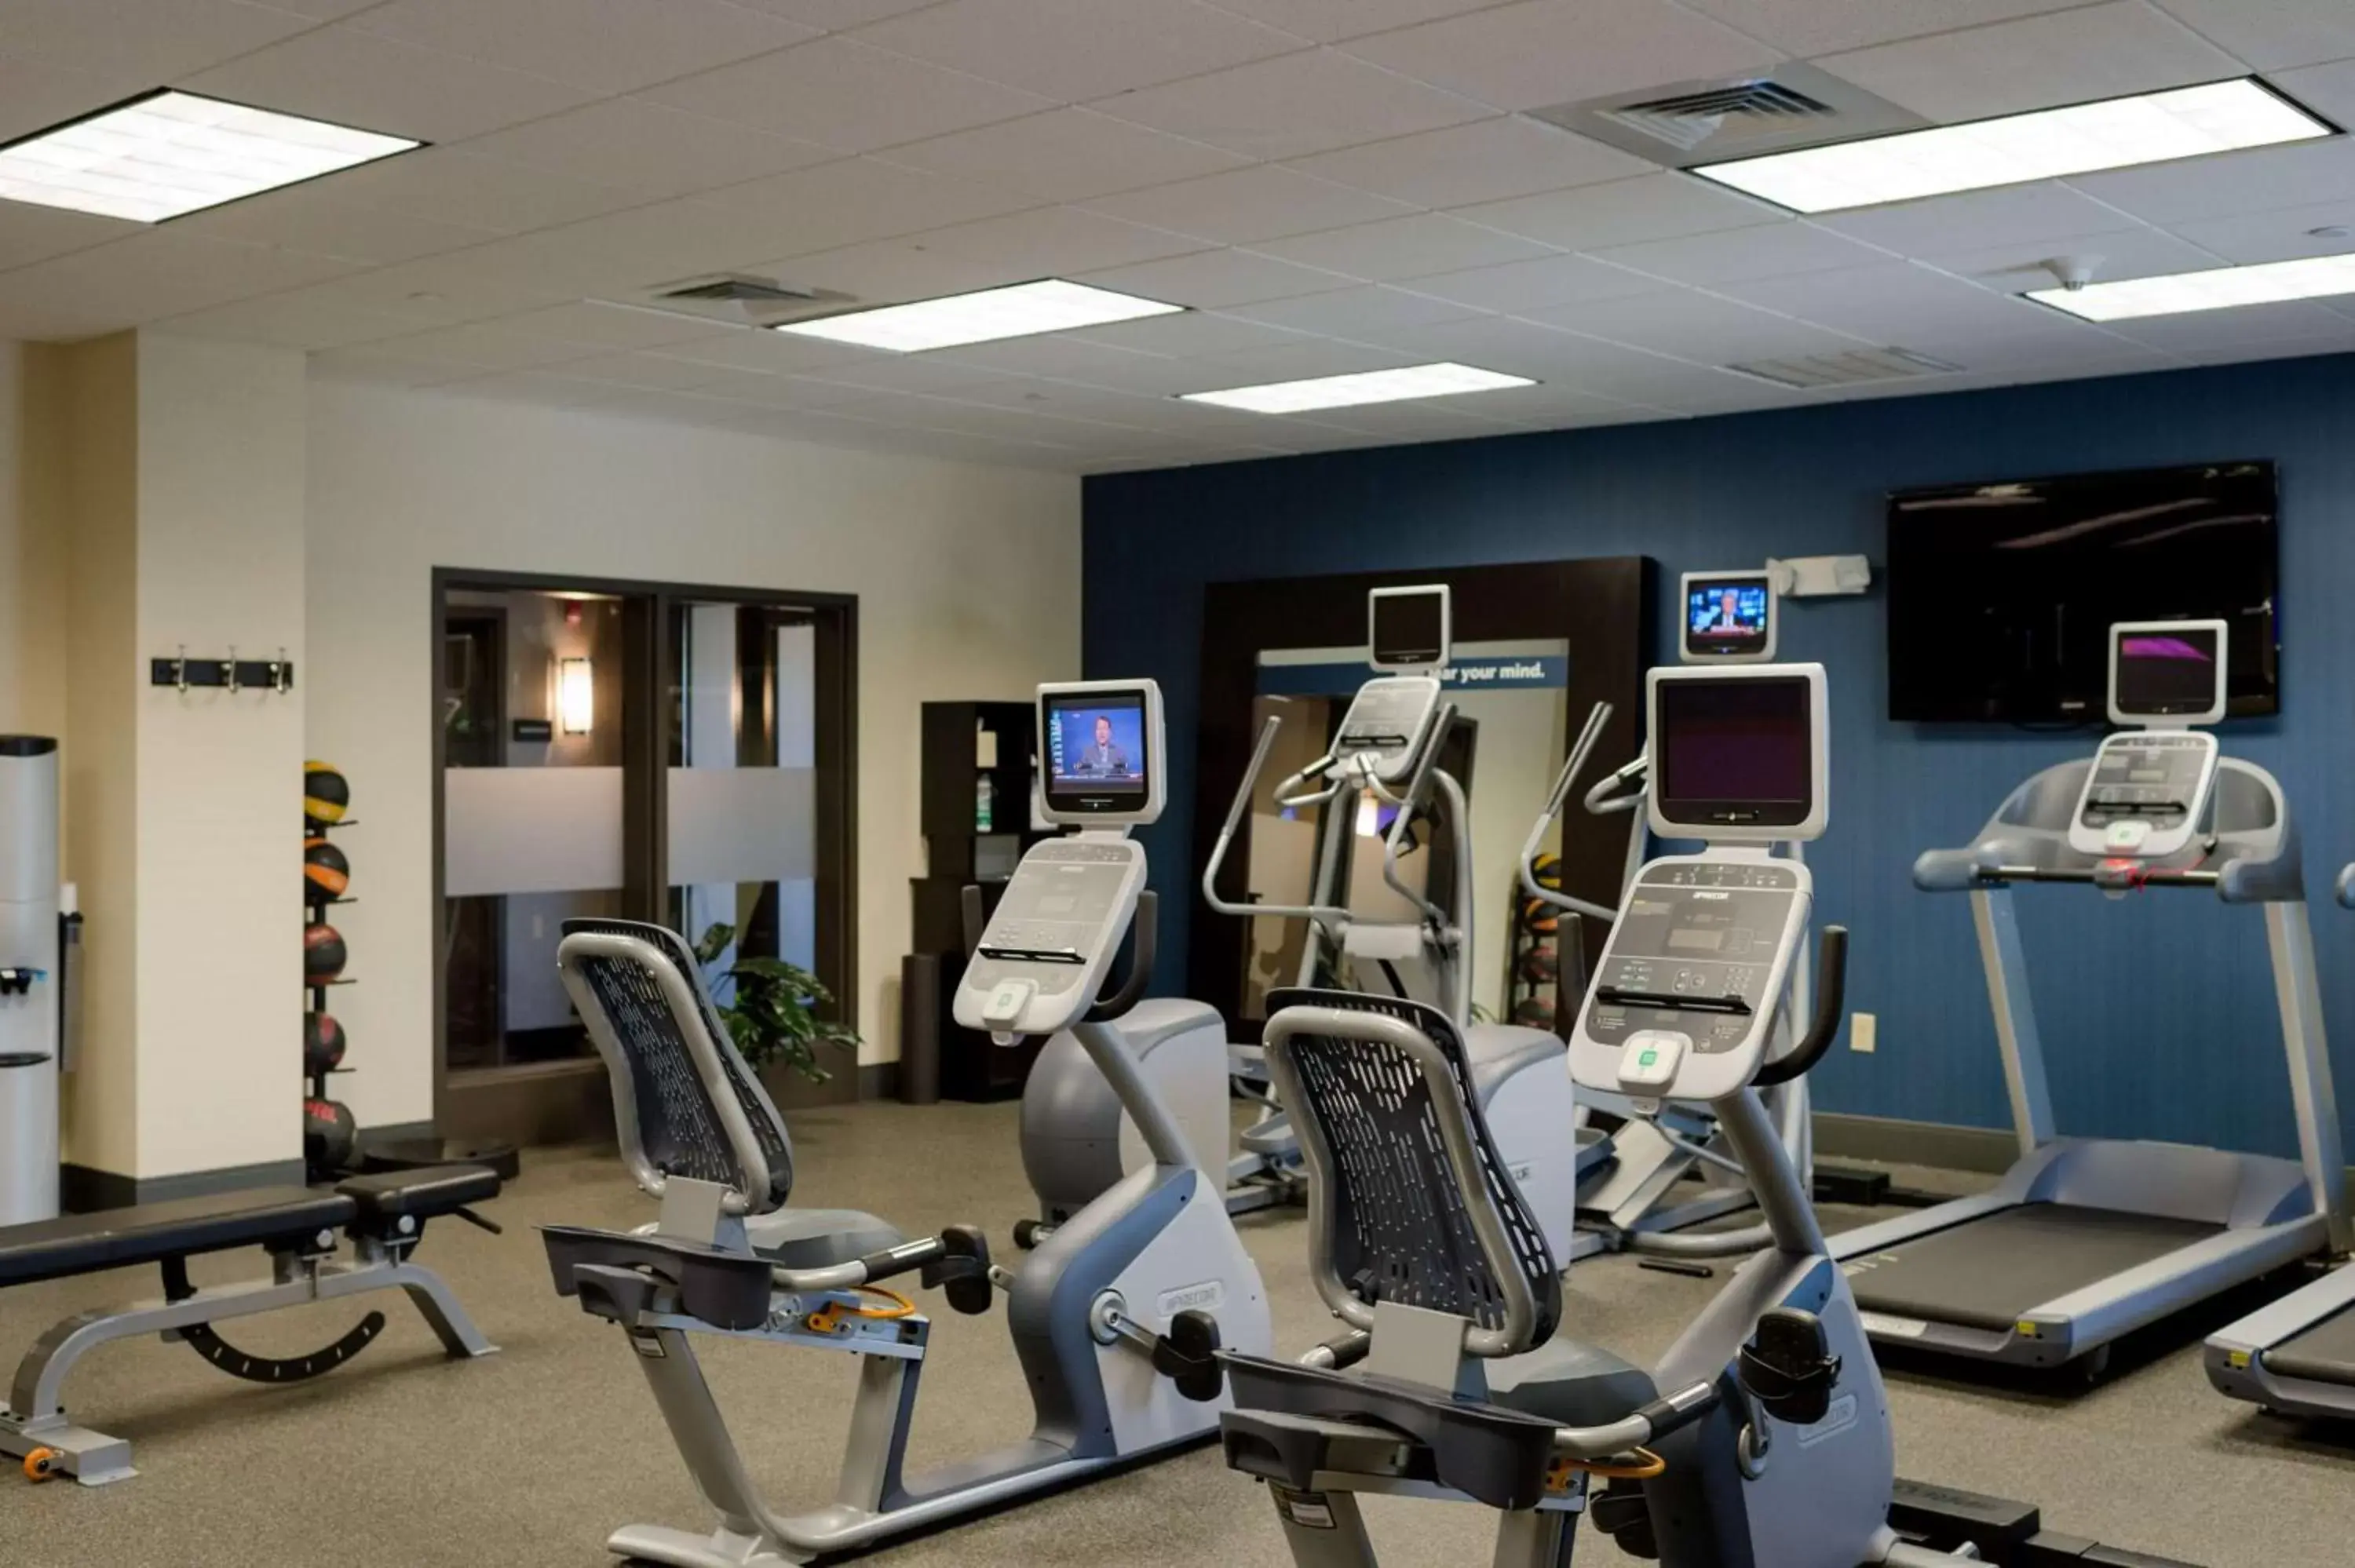 Fitness centre/facilities, Fitness Center/Facilities in Hampton Inn Oxford/Conference Center